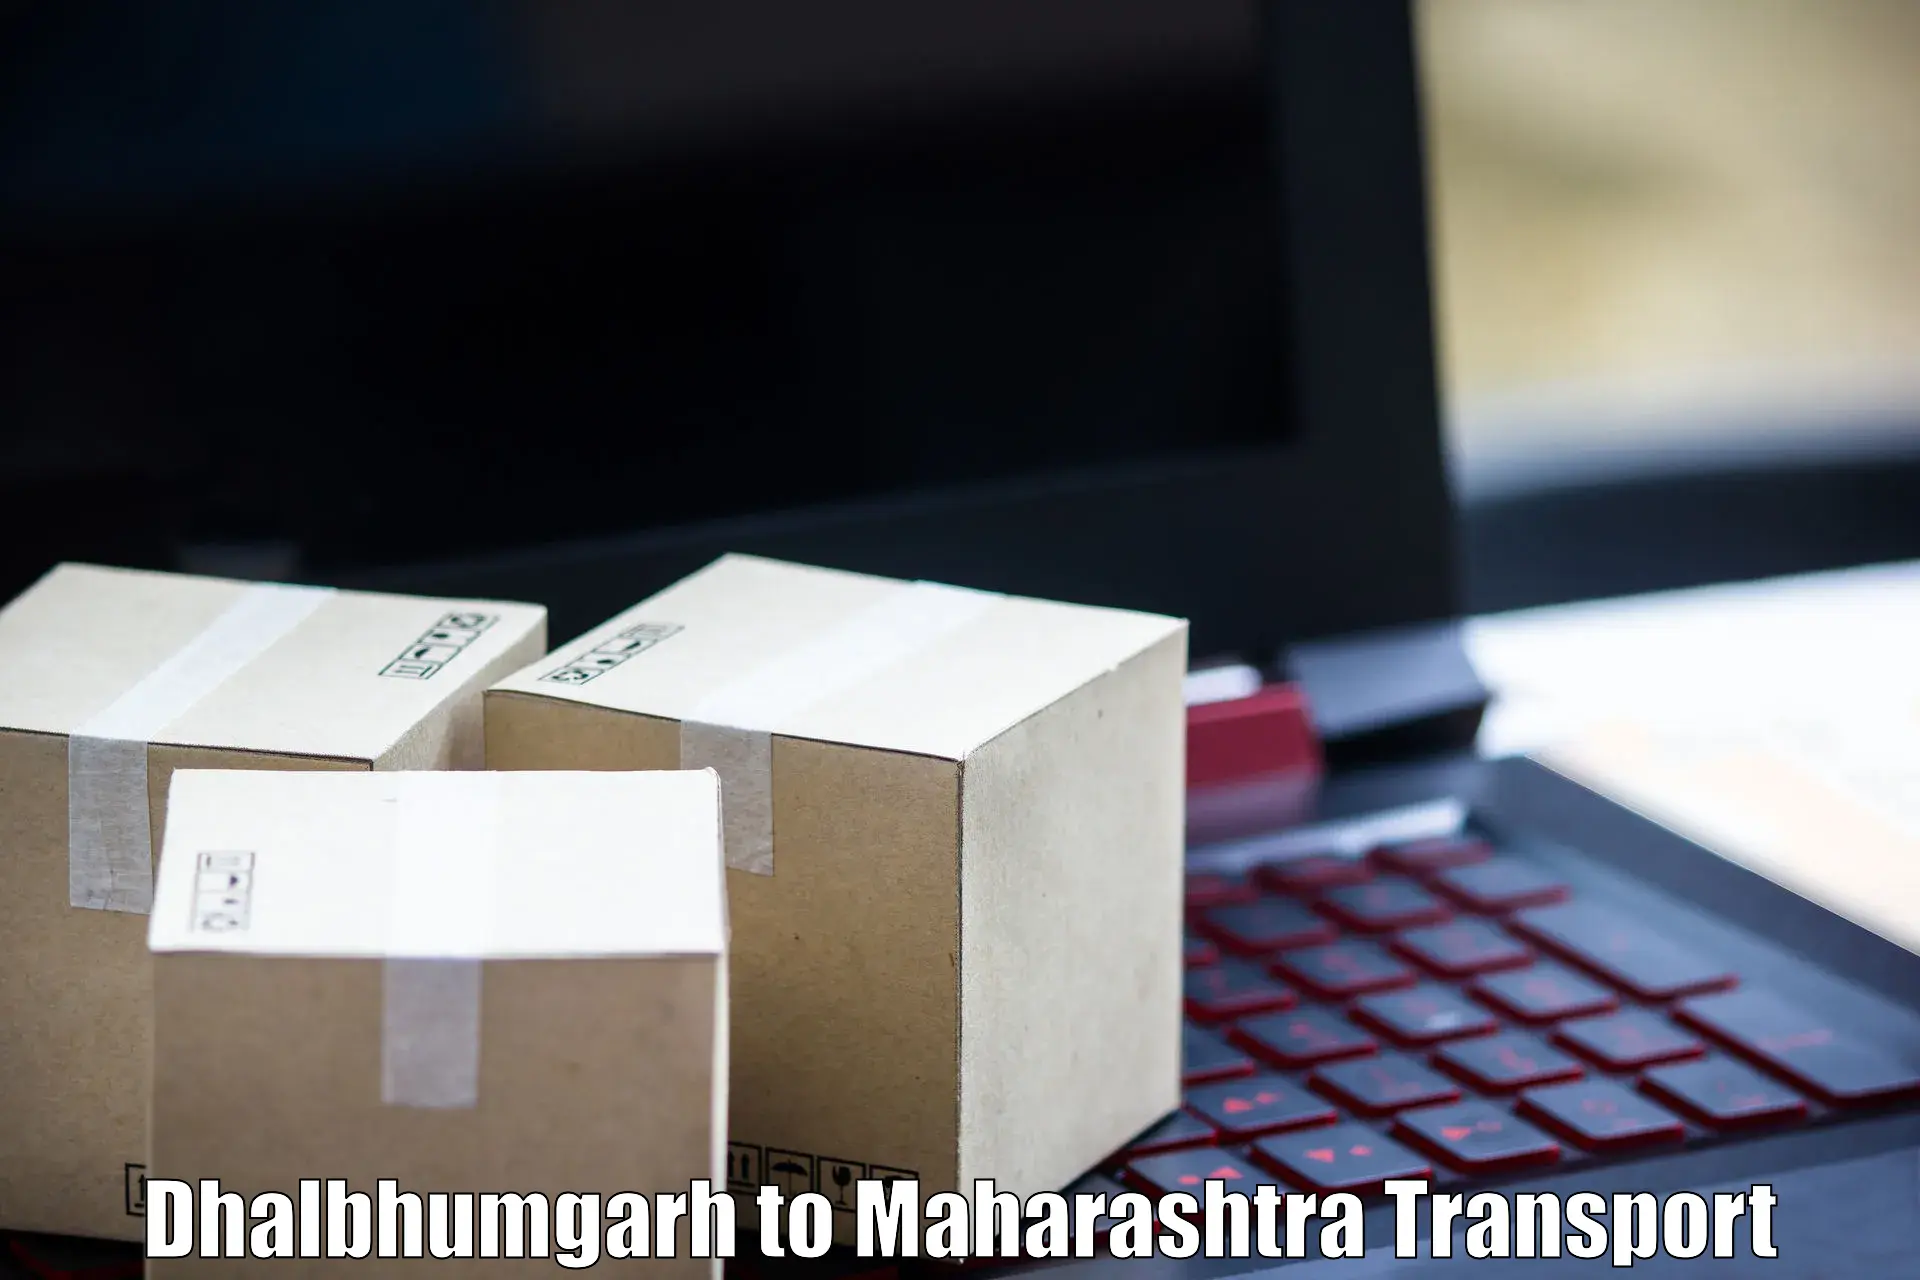 Online transport service Dhalbhumgarh to Shirdi